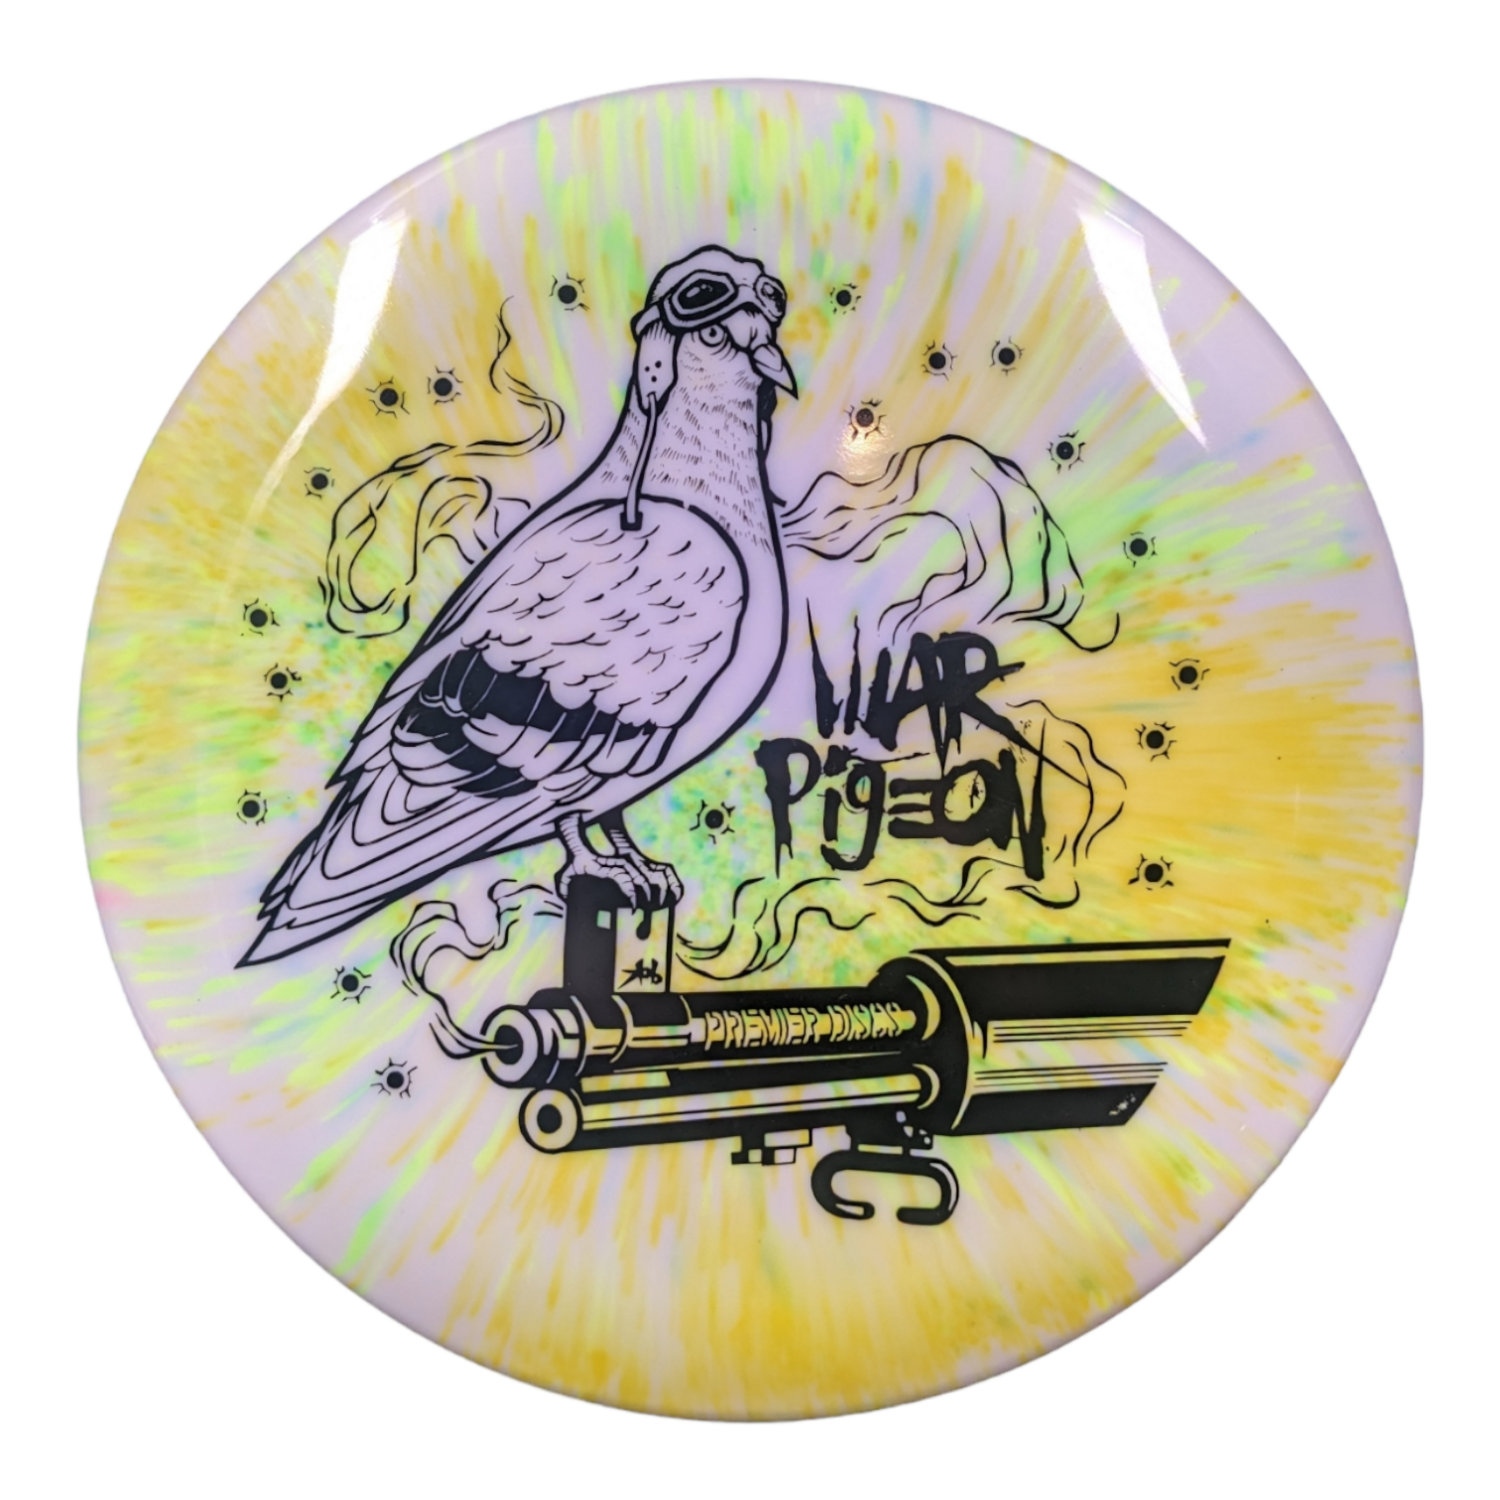 War Pigeon - Dyed - 174g